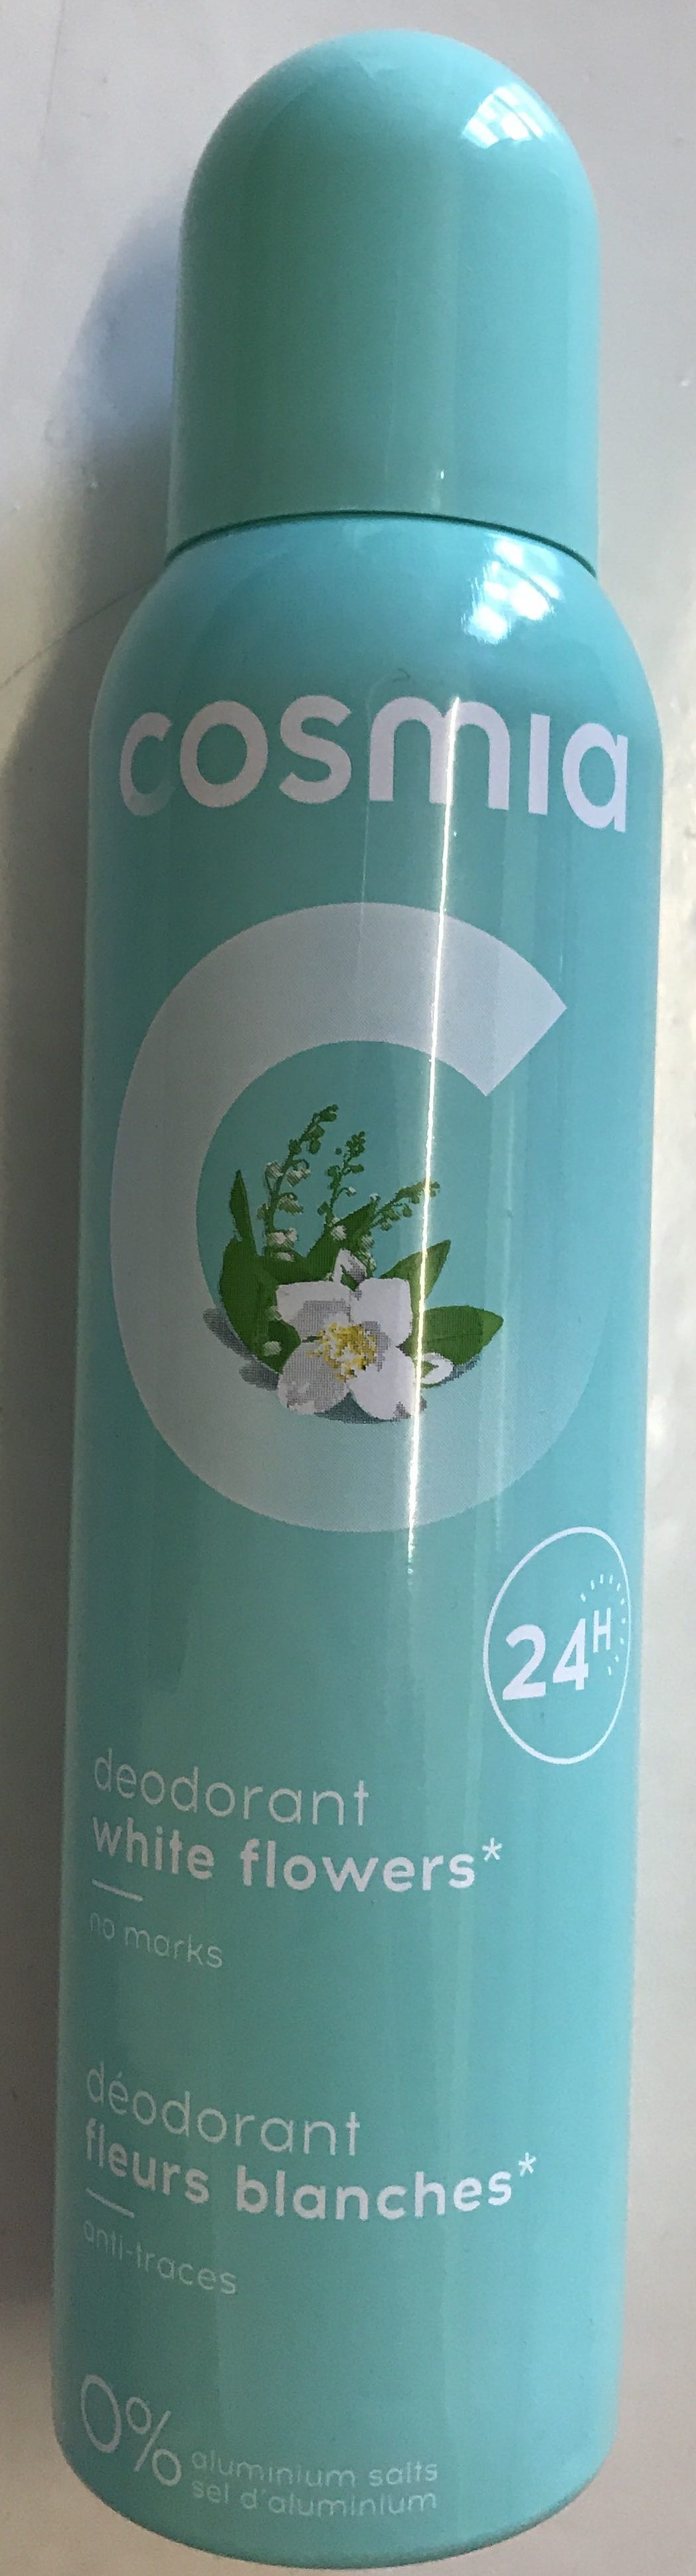 Déodorant fleurs blanches 24H - Produto - fr